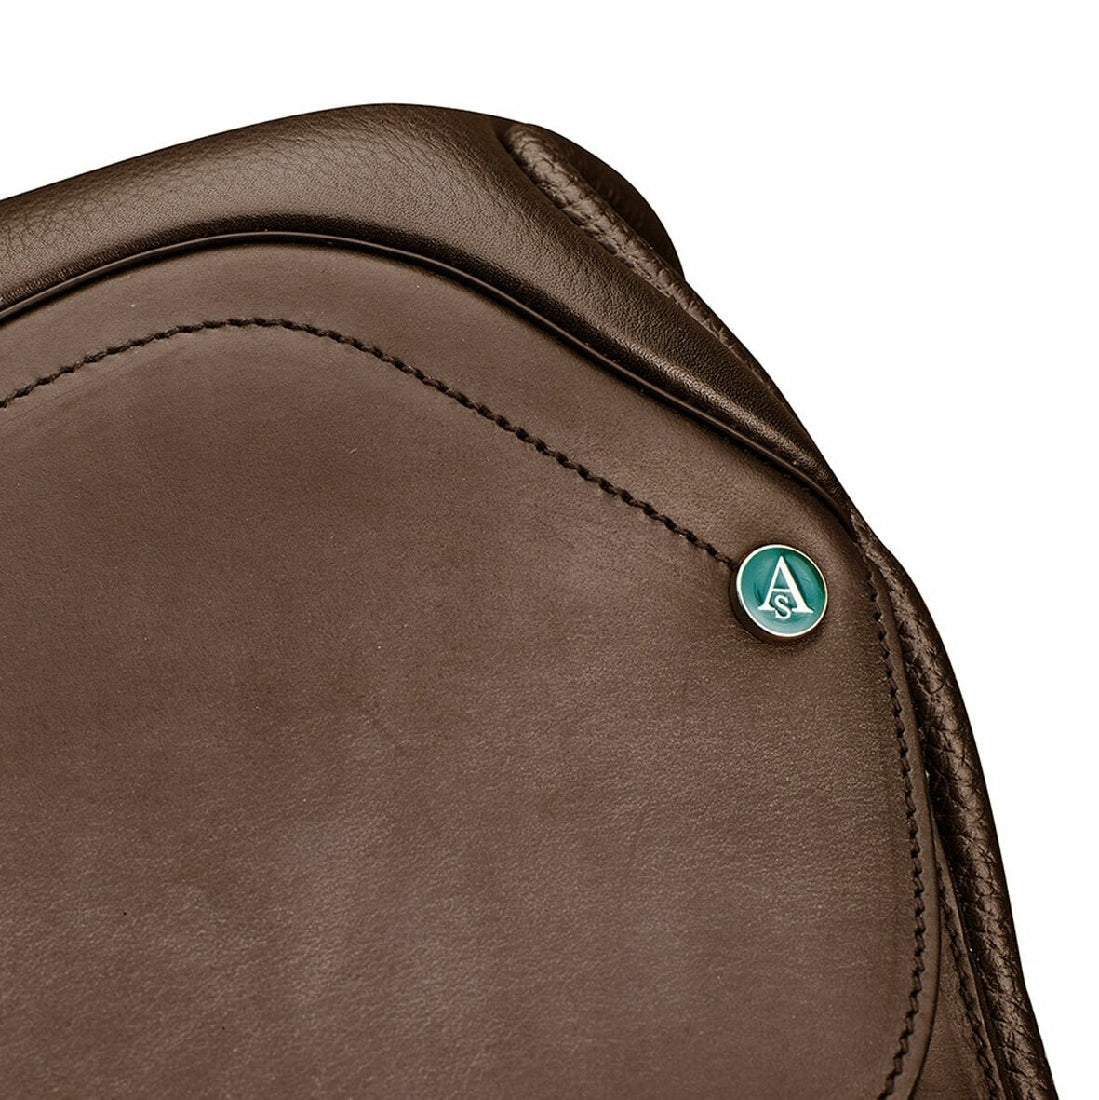 Arena Saddles logo on dark brown leather saddle close-up.